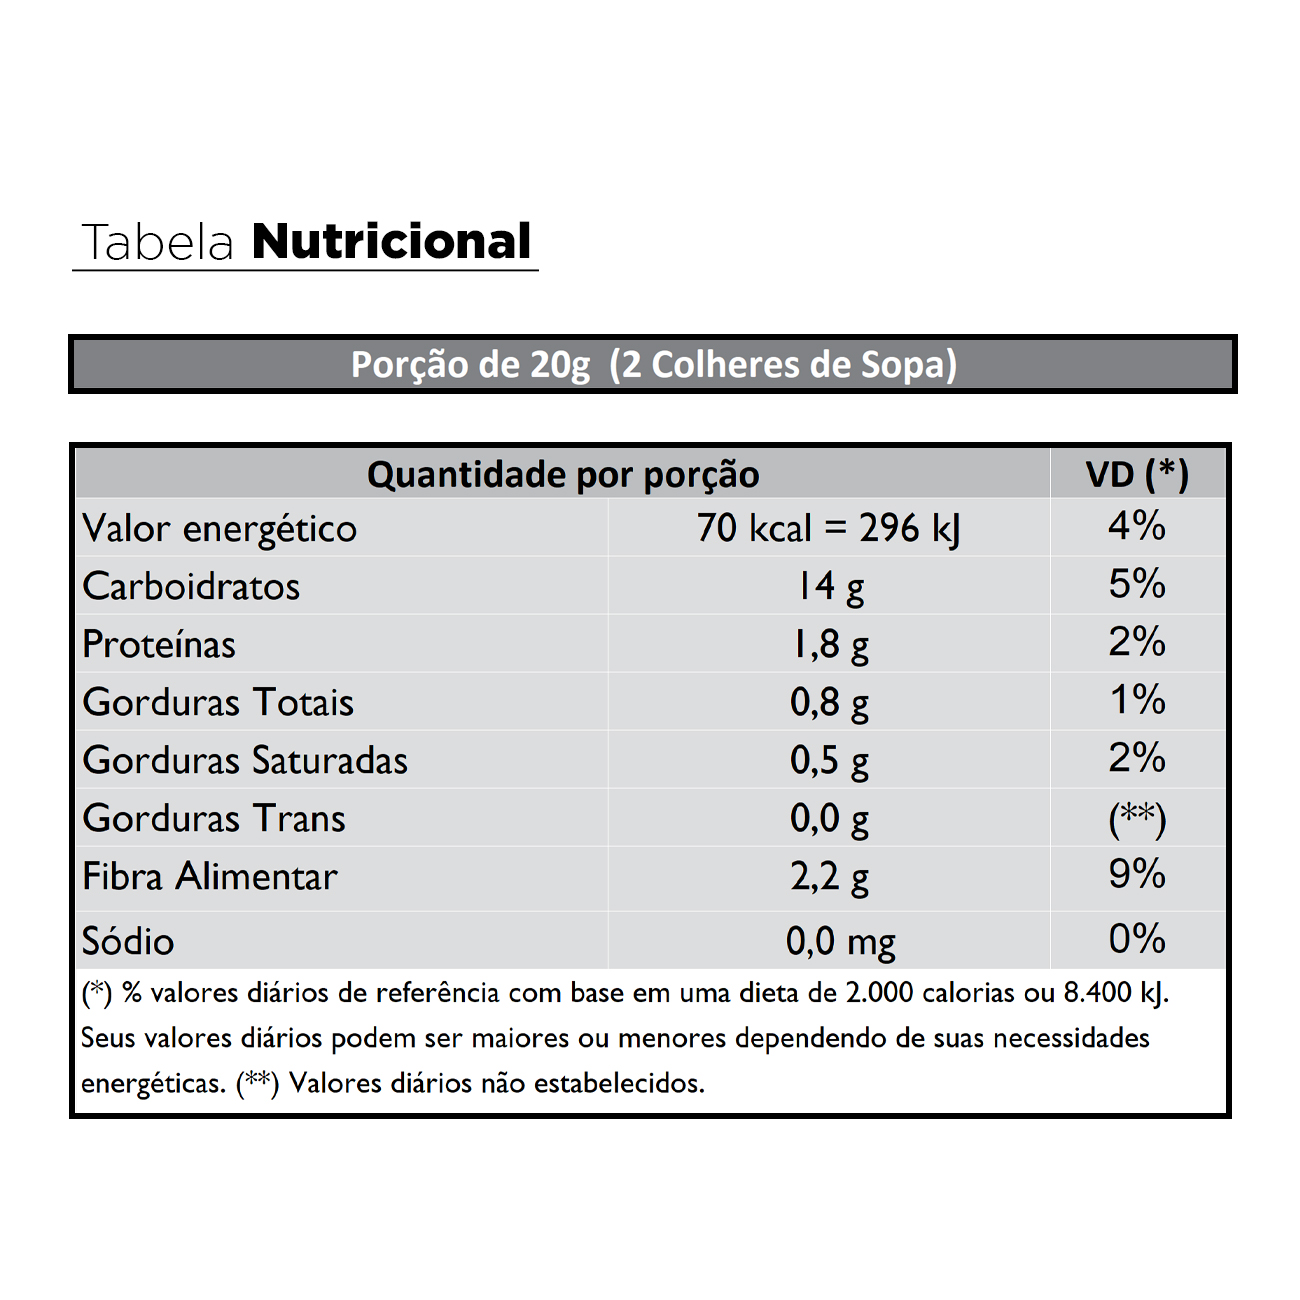 Chocolate em P Cargill Genuine 33% Cacau 1,05kg